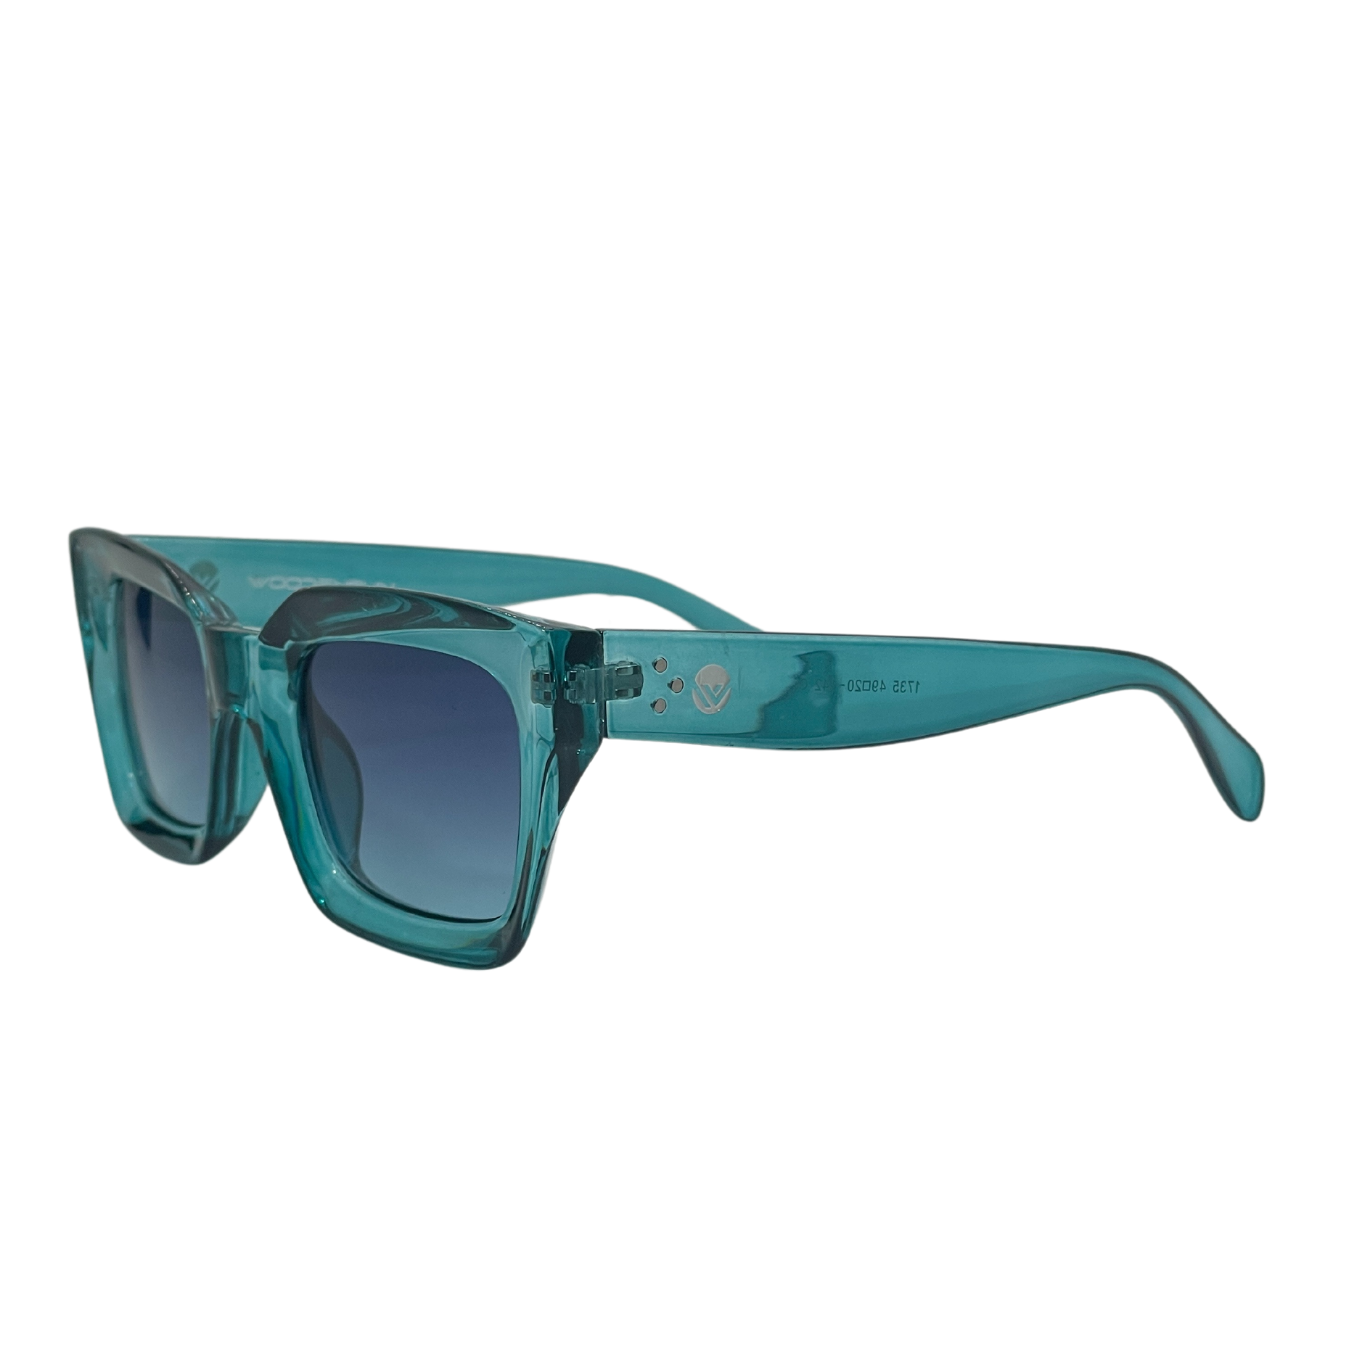 Bayside - Sunglasses - Woodensun Sunglasses | Eco-fashion eyewear